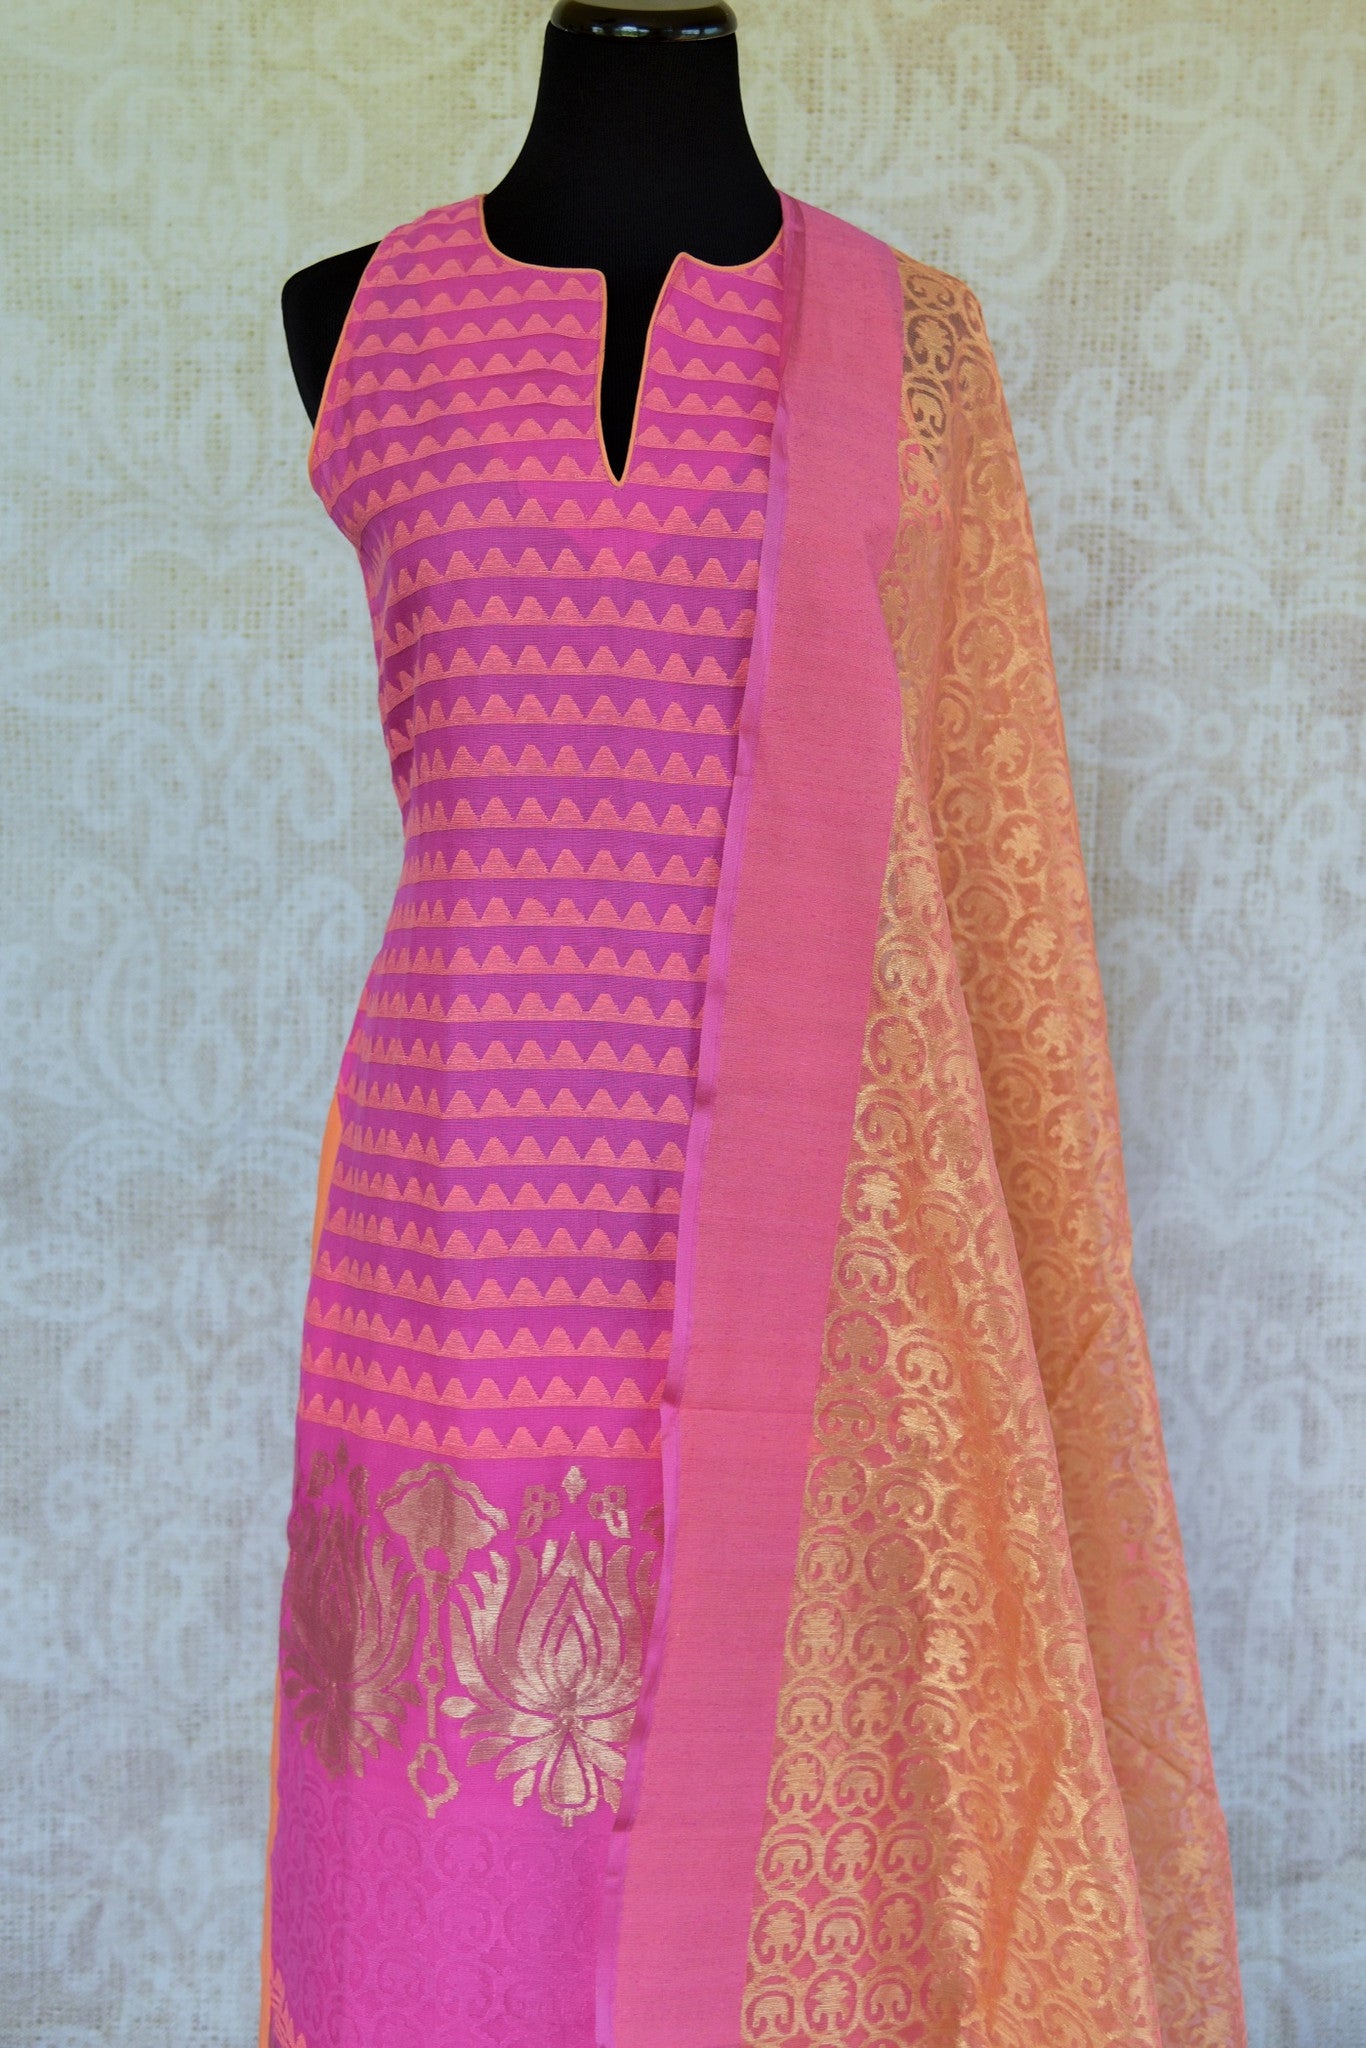 501011-suit-sleeveless-pink-geometric-pattern-golden-lotus-scarf-scarf-view